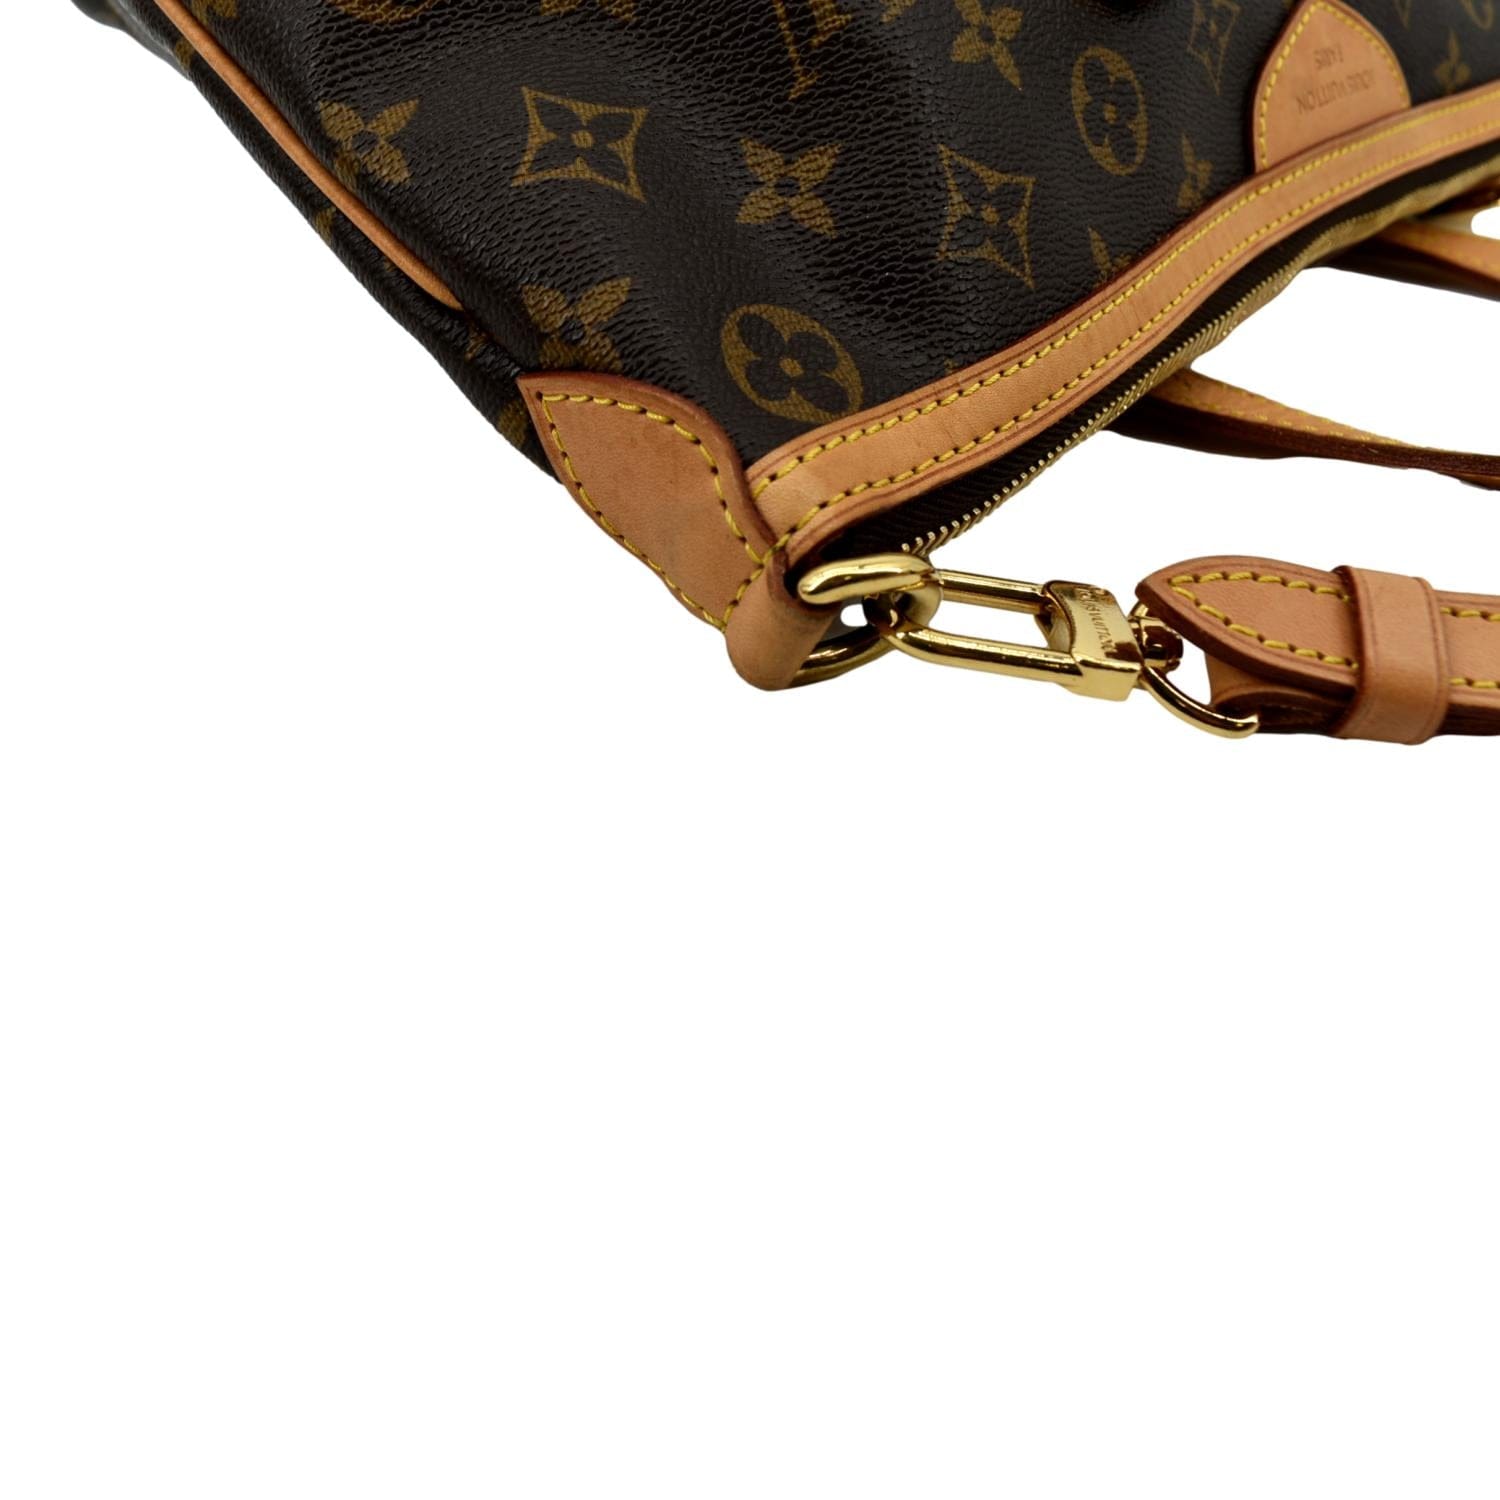 Palermo PM Monogram – Keeks Designer Handbags